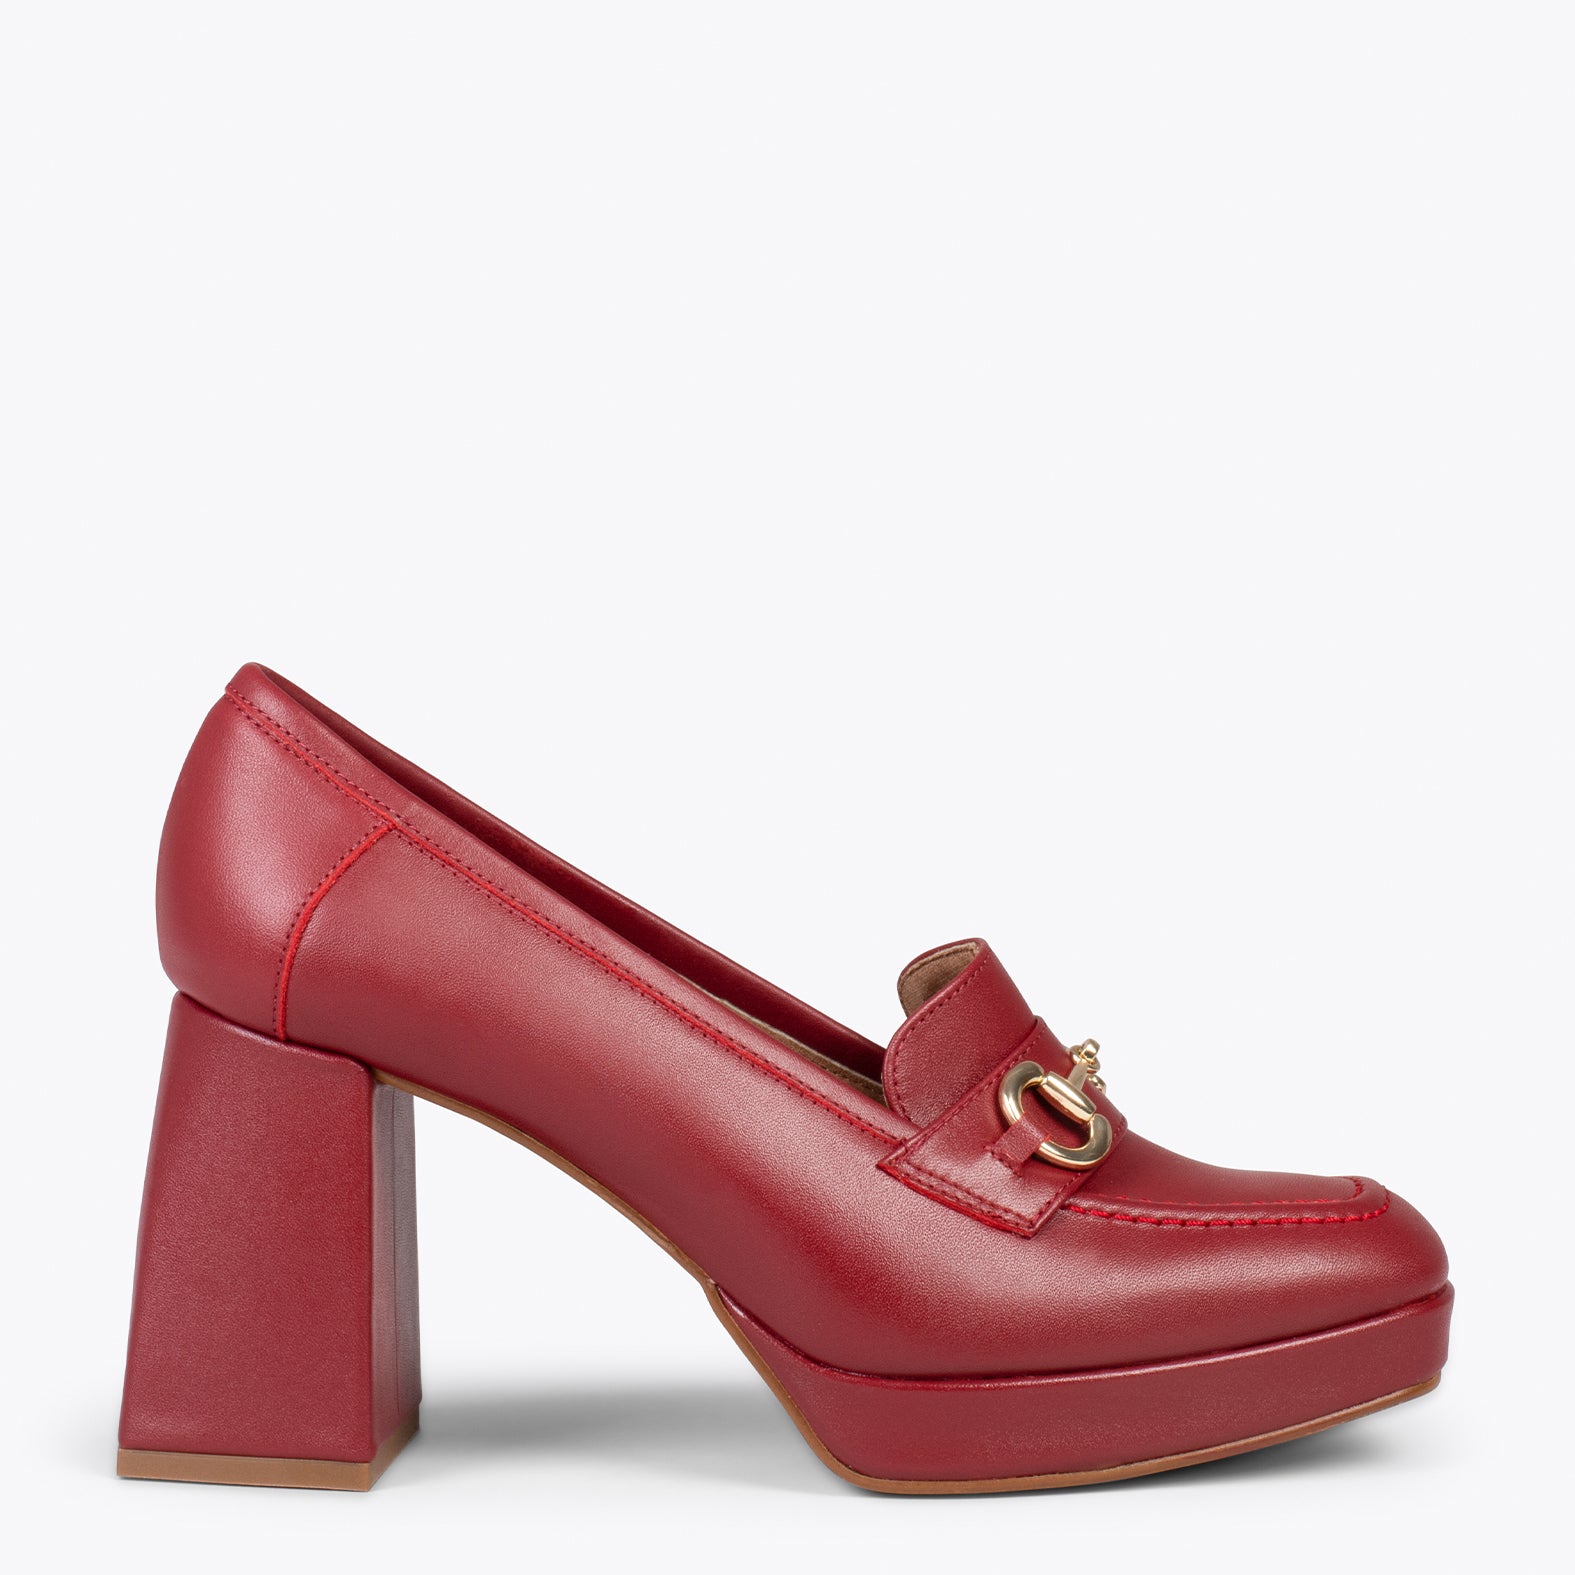 ANNETTE – BURGUNDY moccasins with block heel and platform